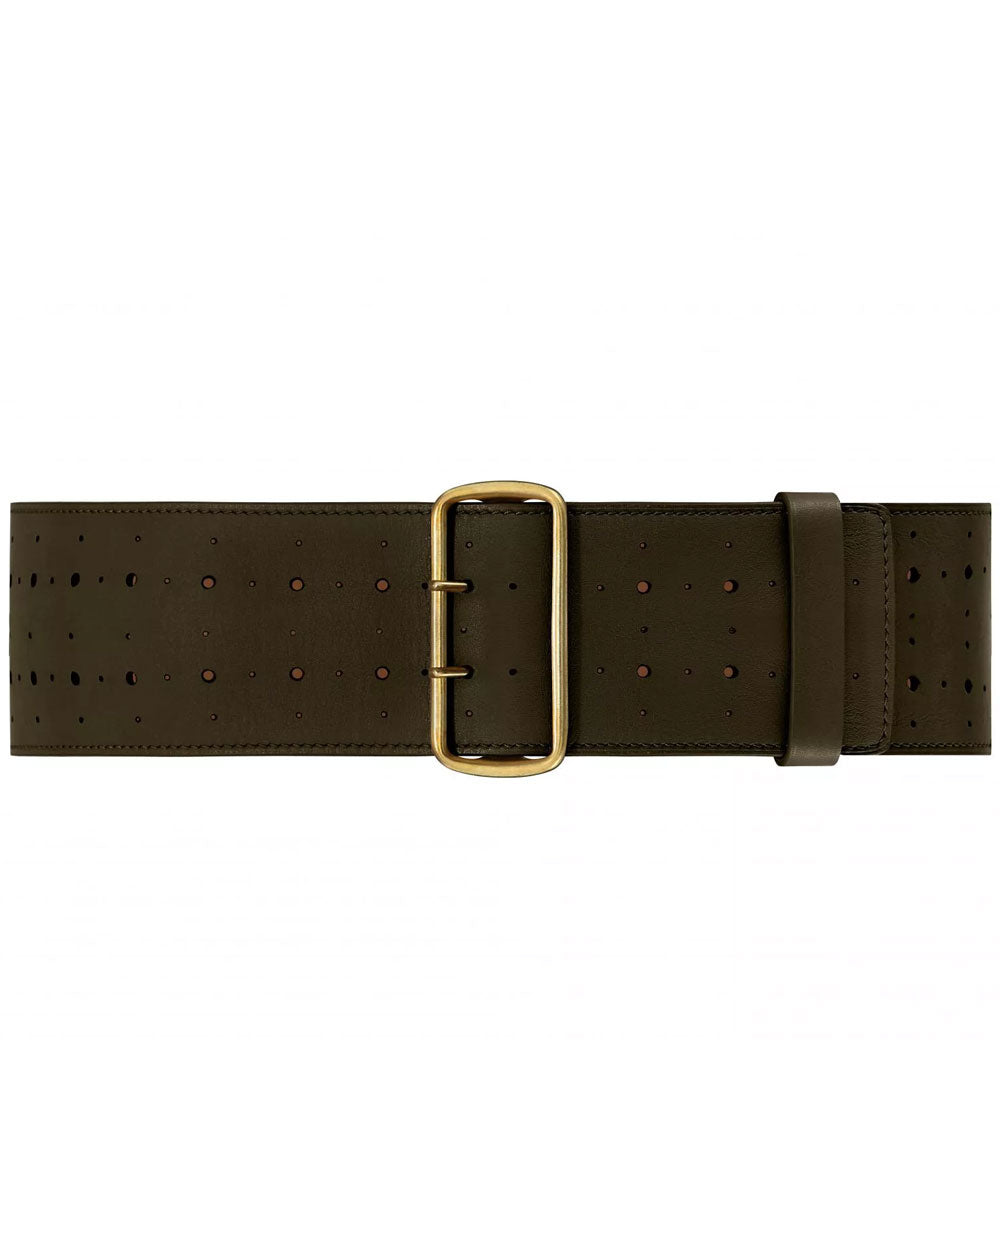 Le Celeste Smooth Leather Belt in Khaki